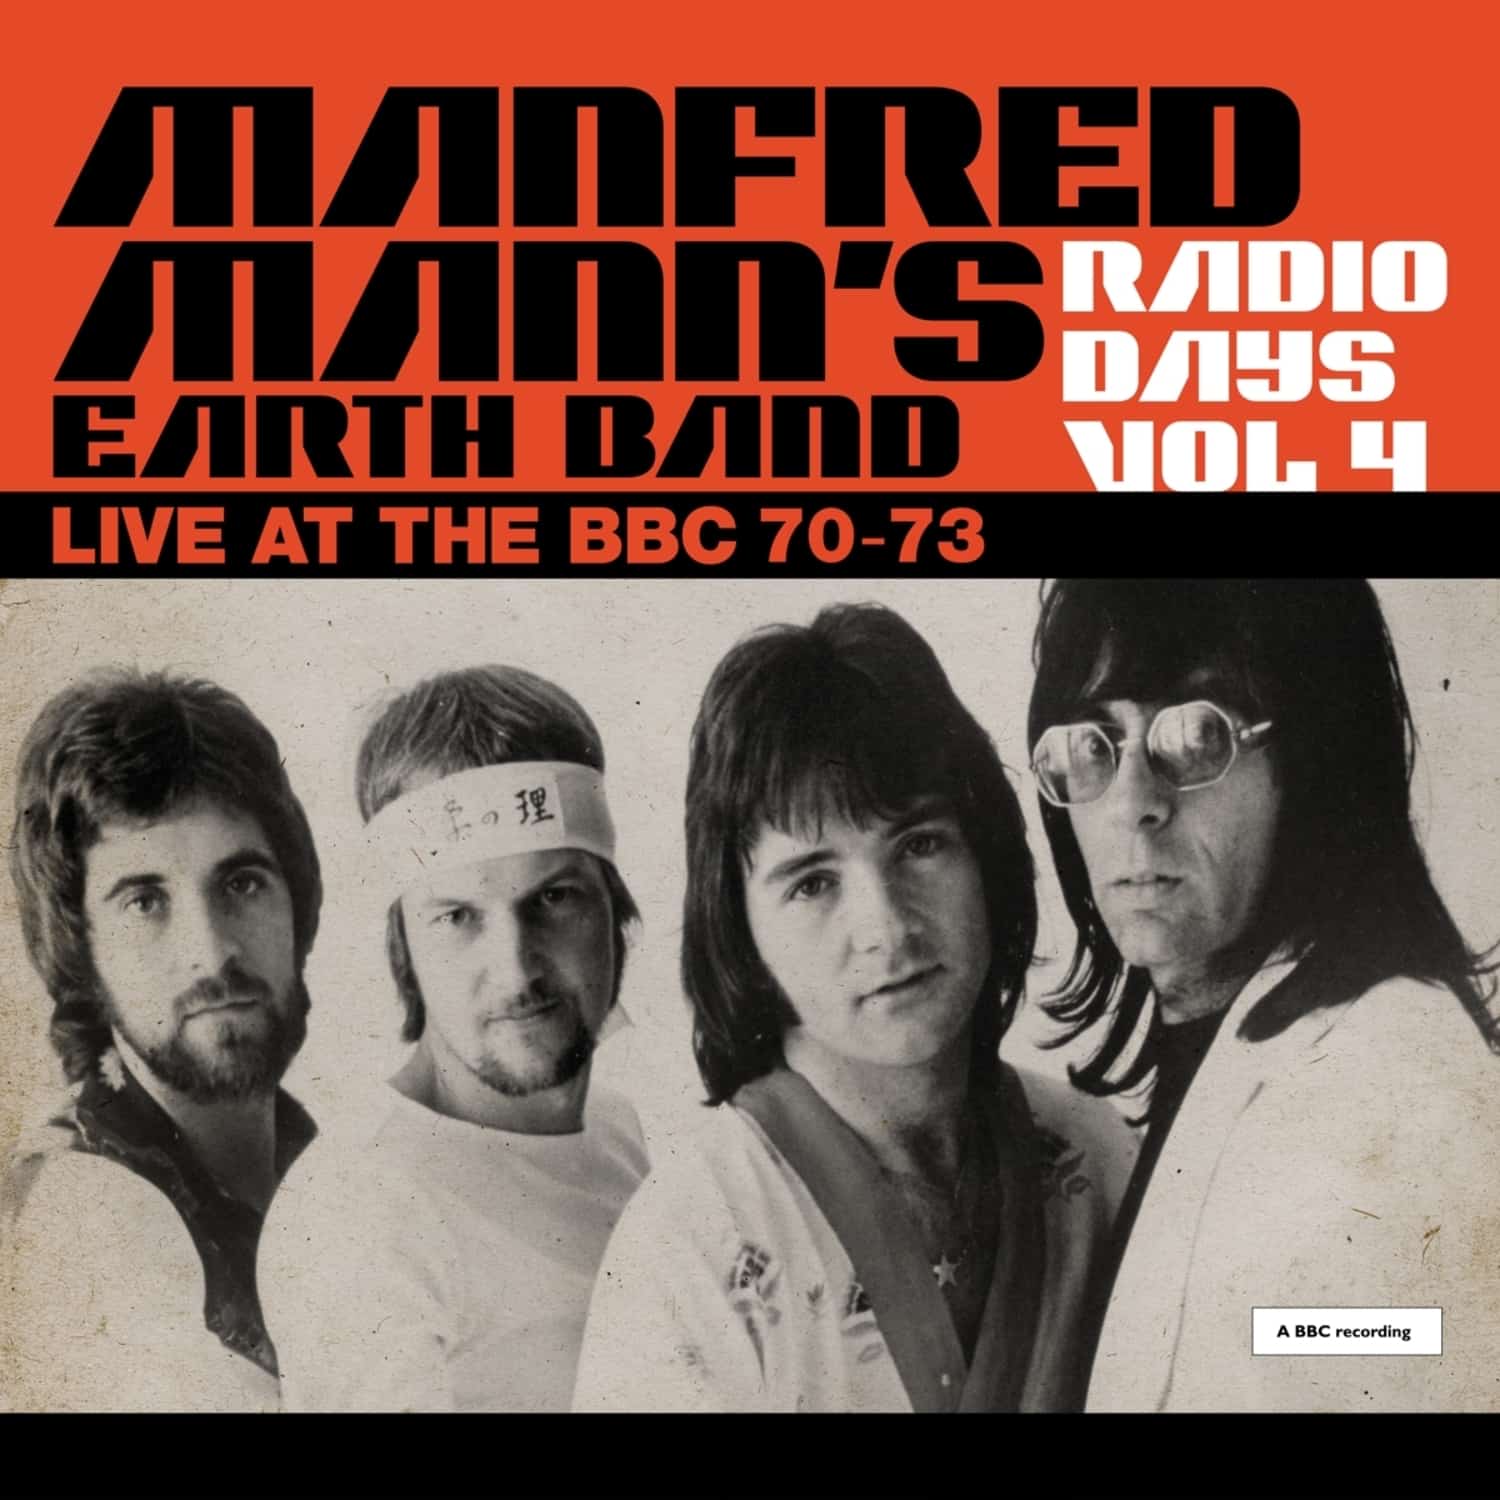 Manfred Mann s Earth Band - RADIO DAYS VOL.4 